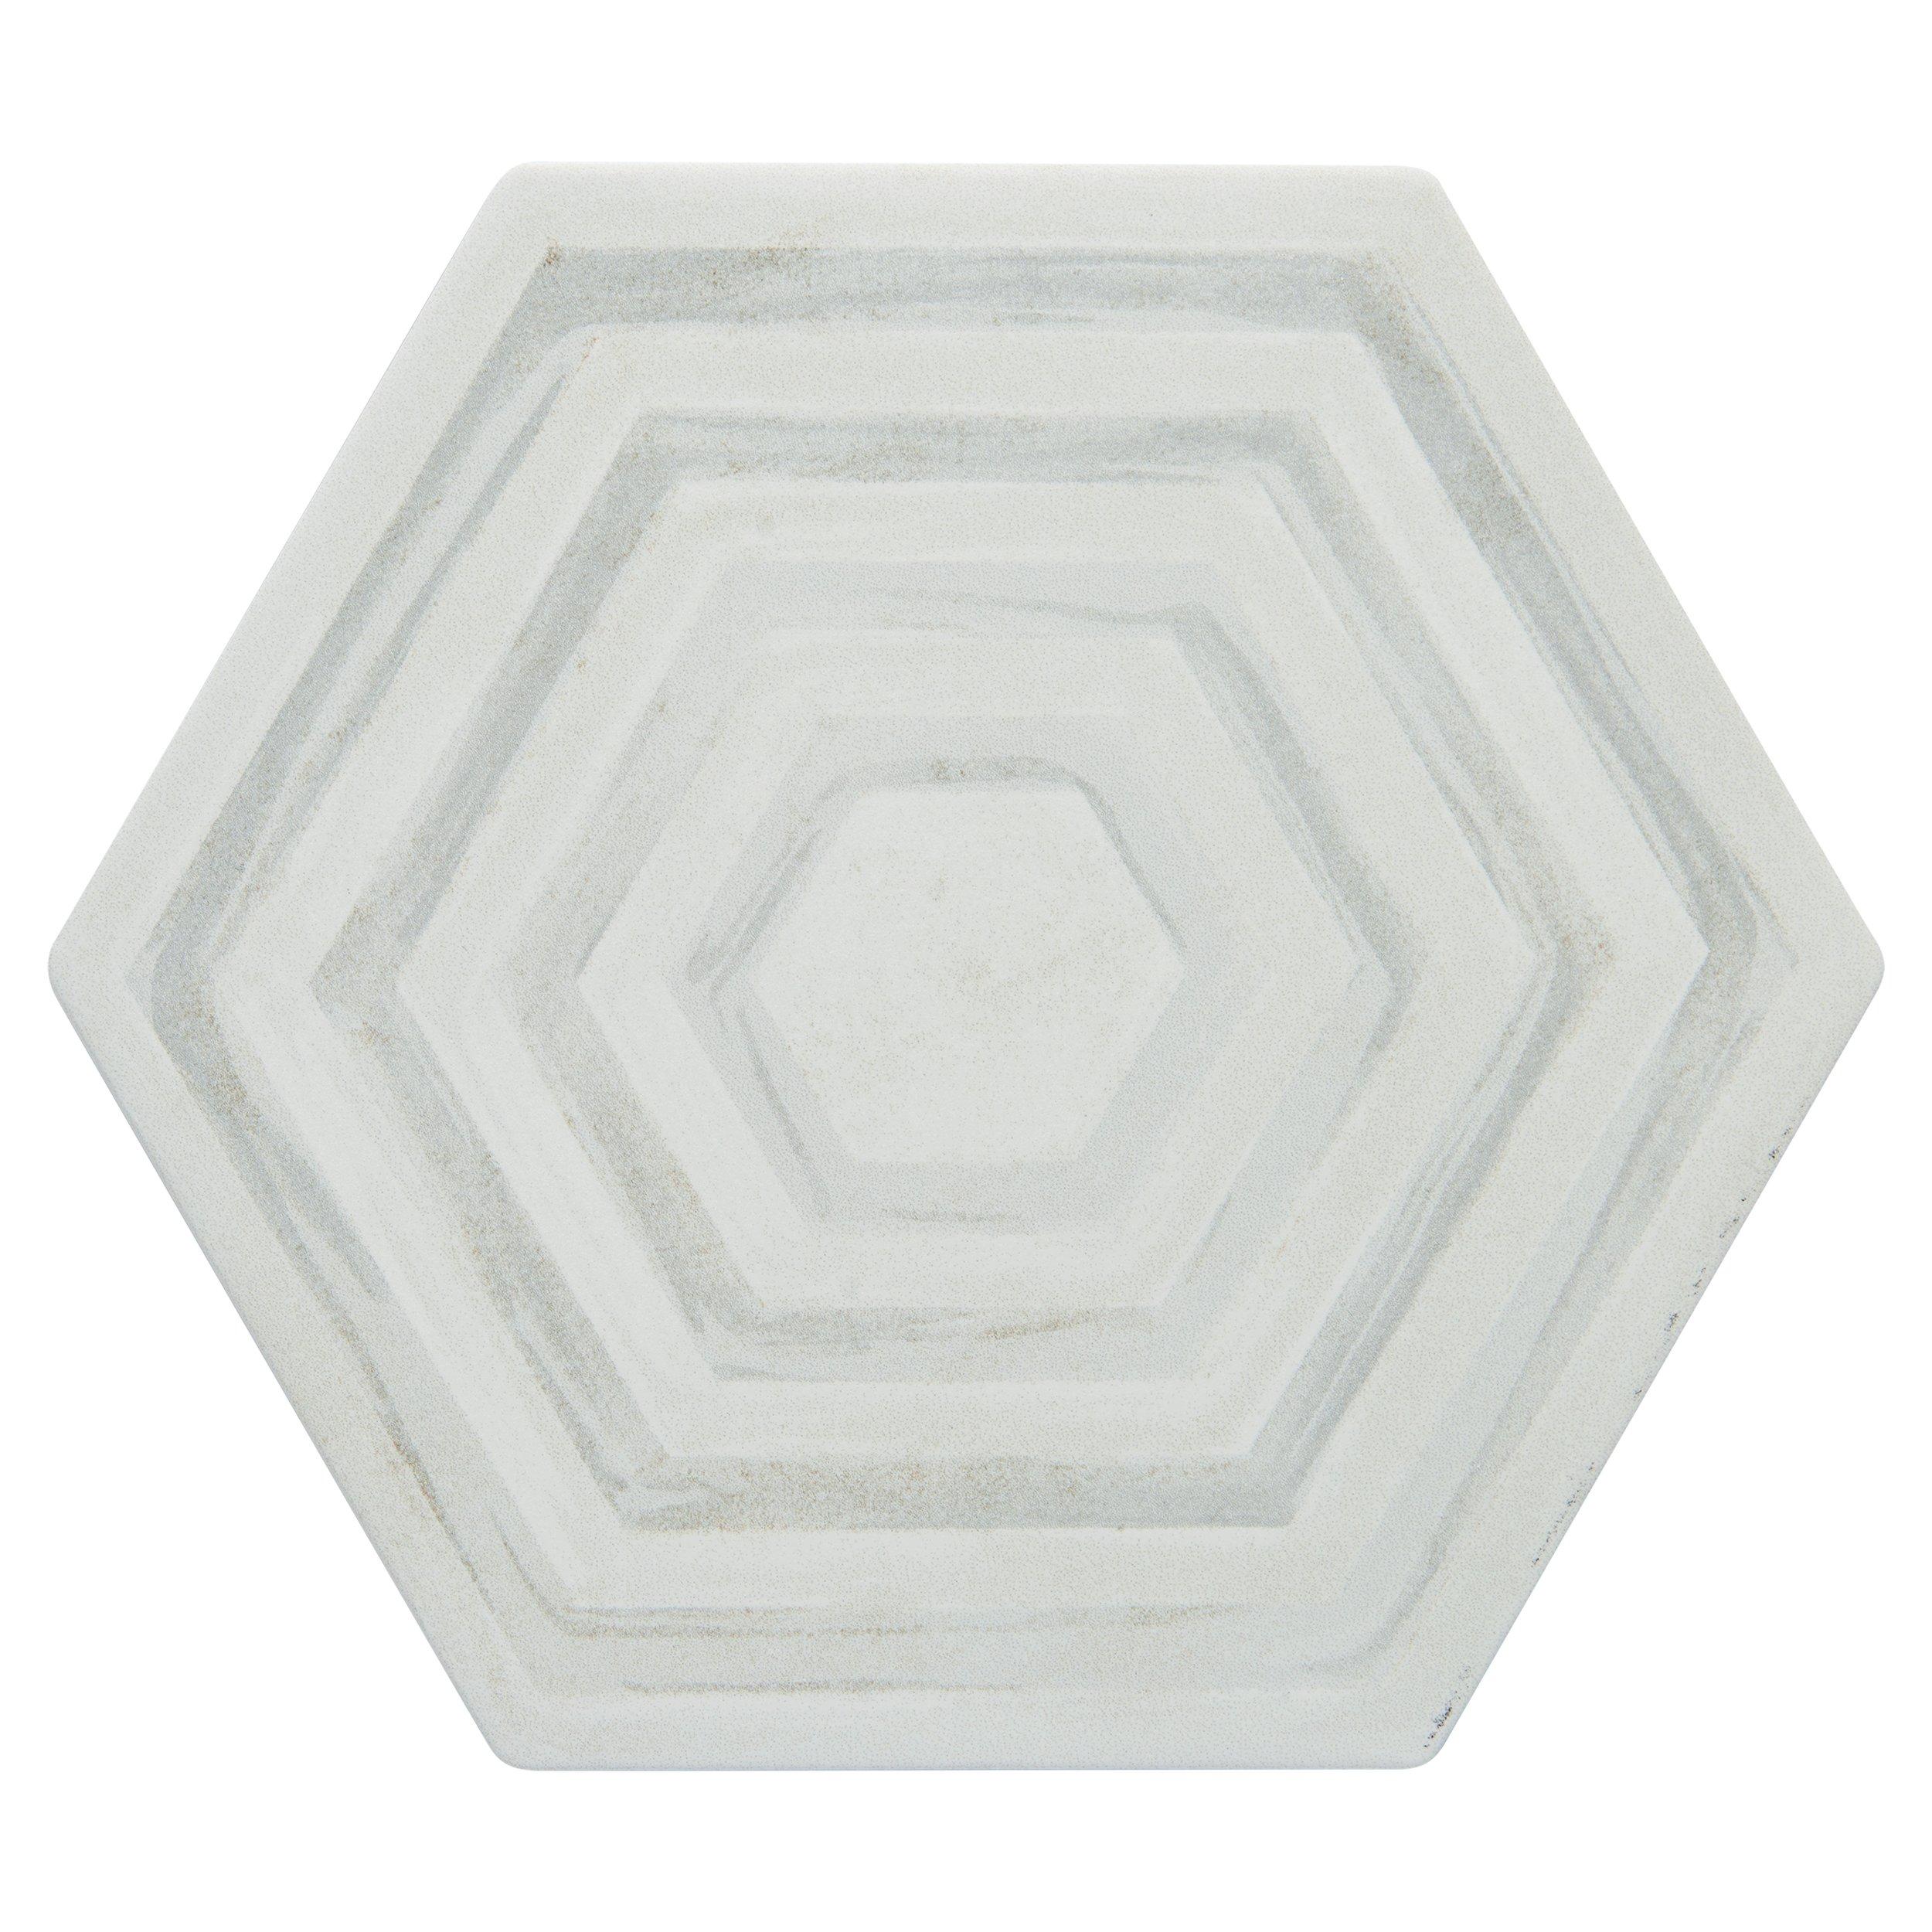 Vancouver Hexagon Porcelain Tile